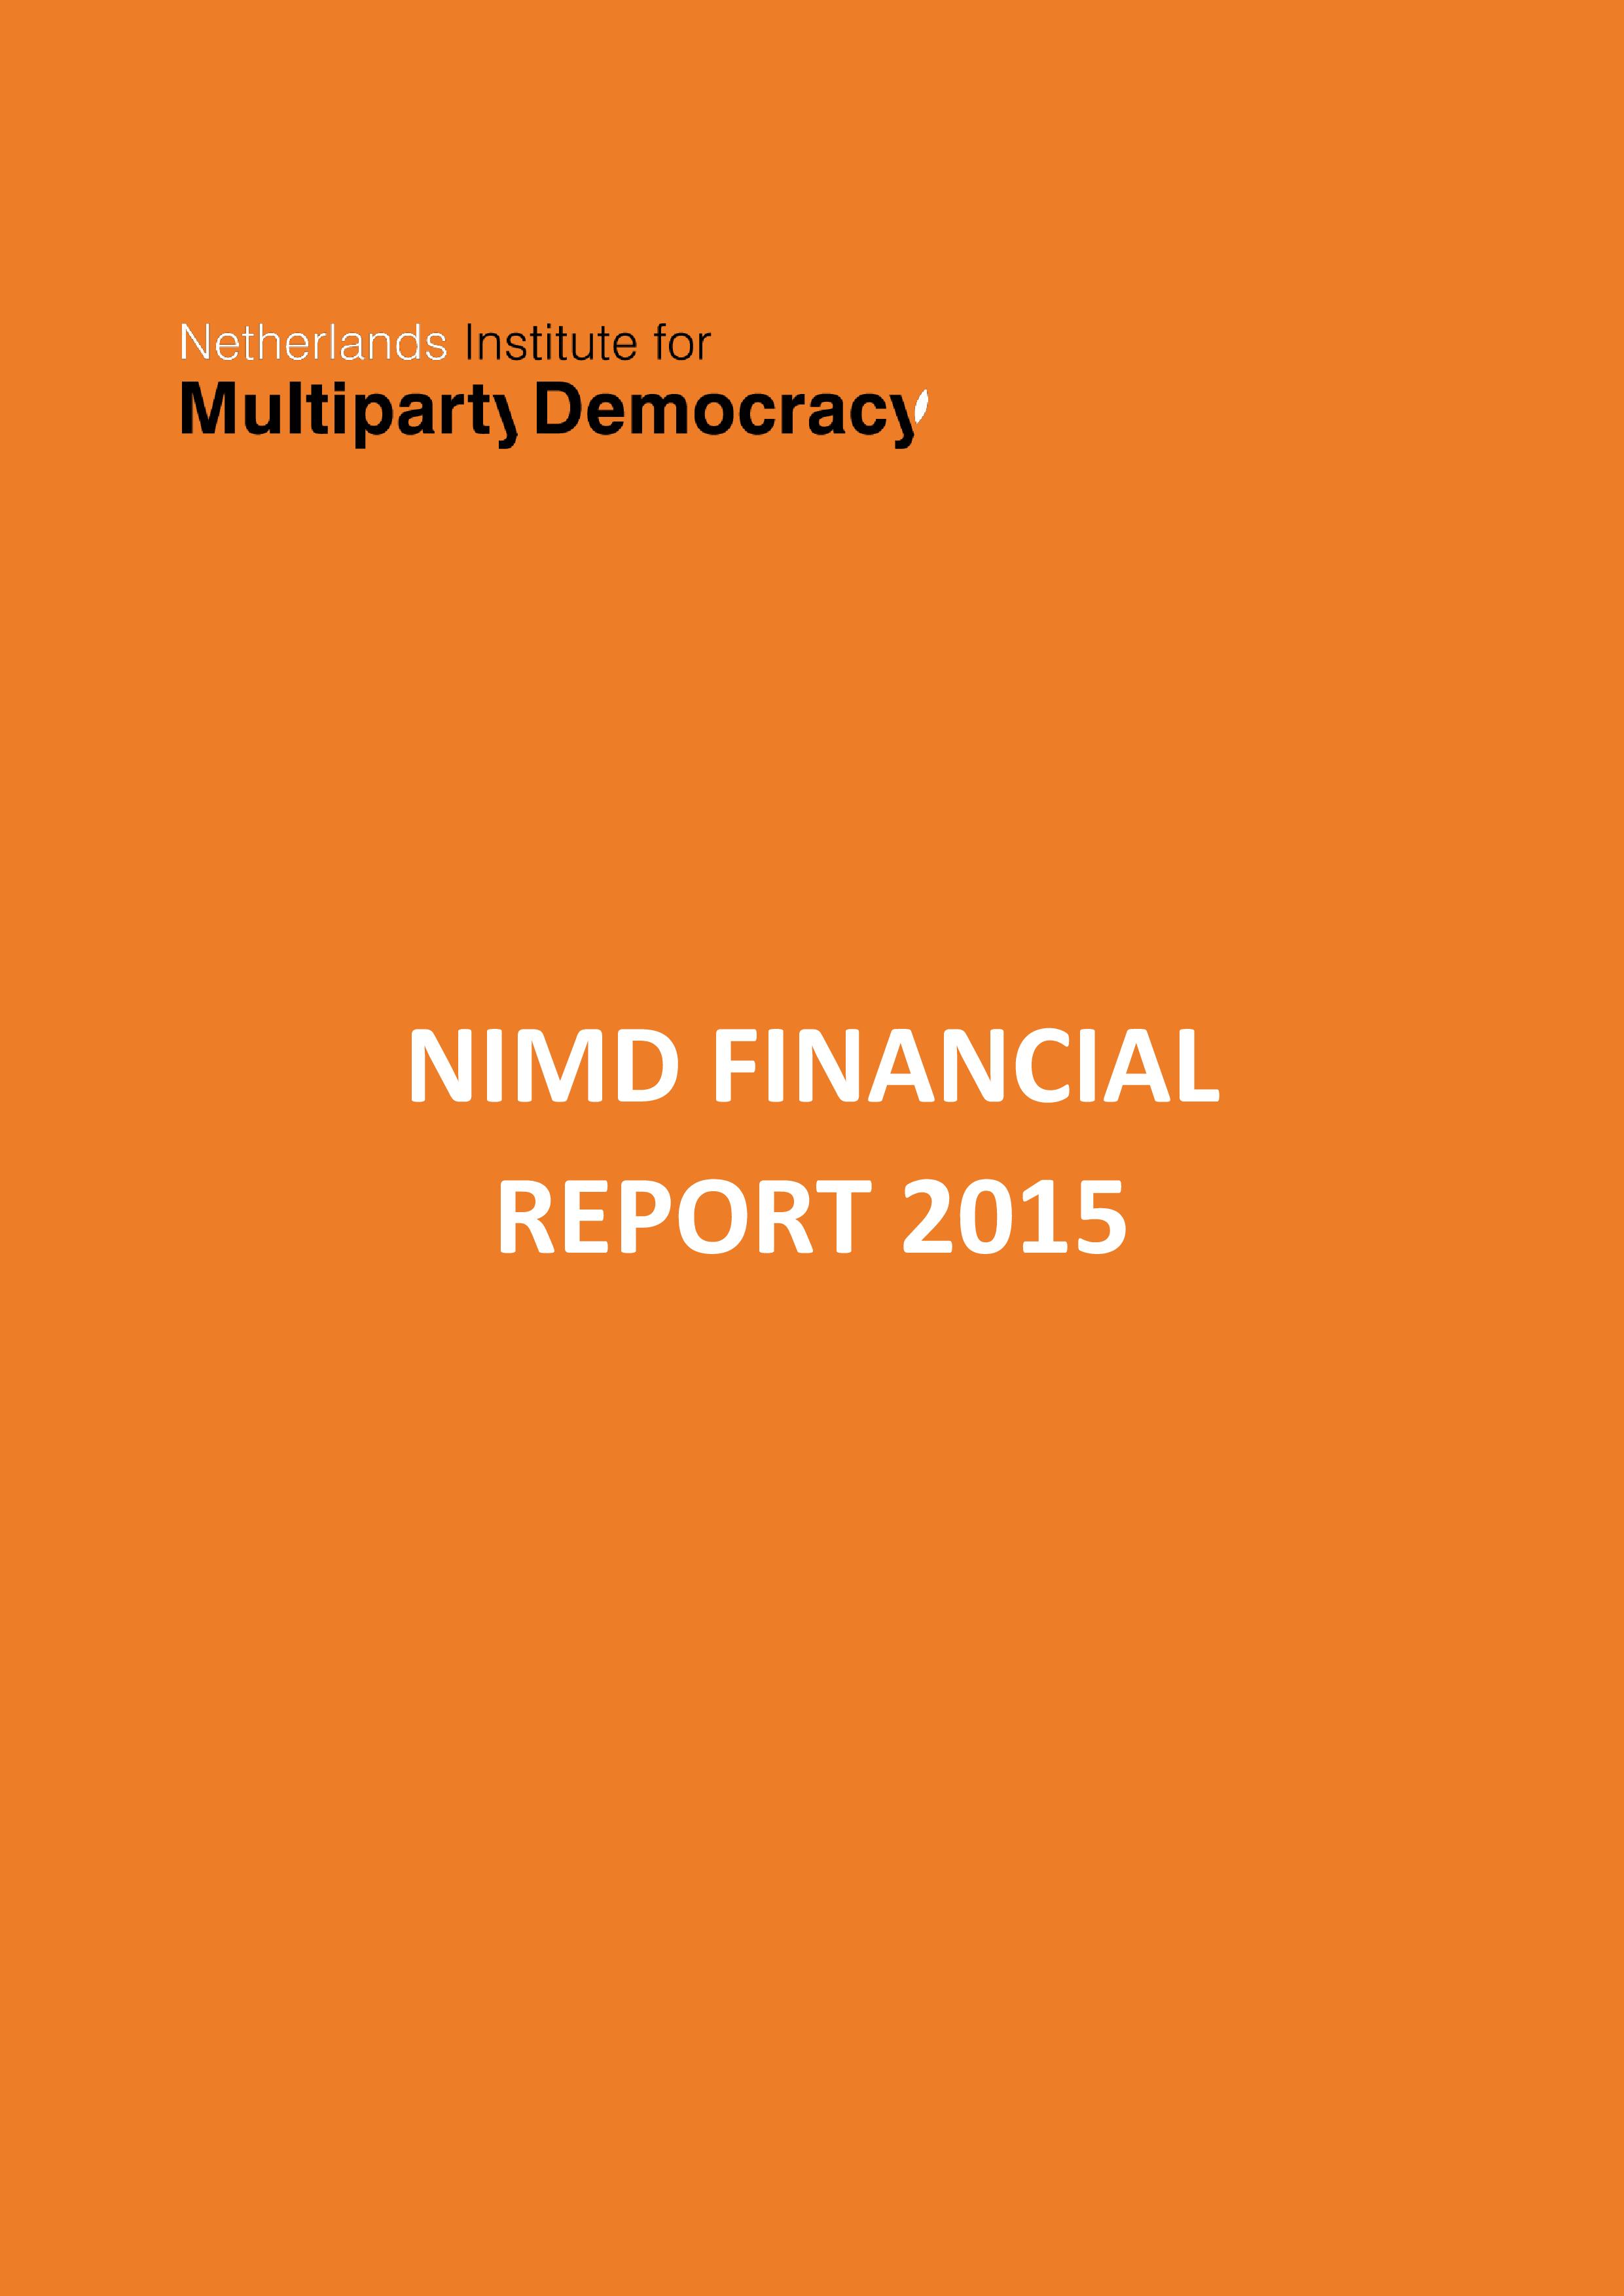 financial-report-2015-nimd